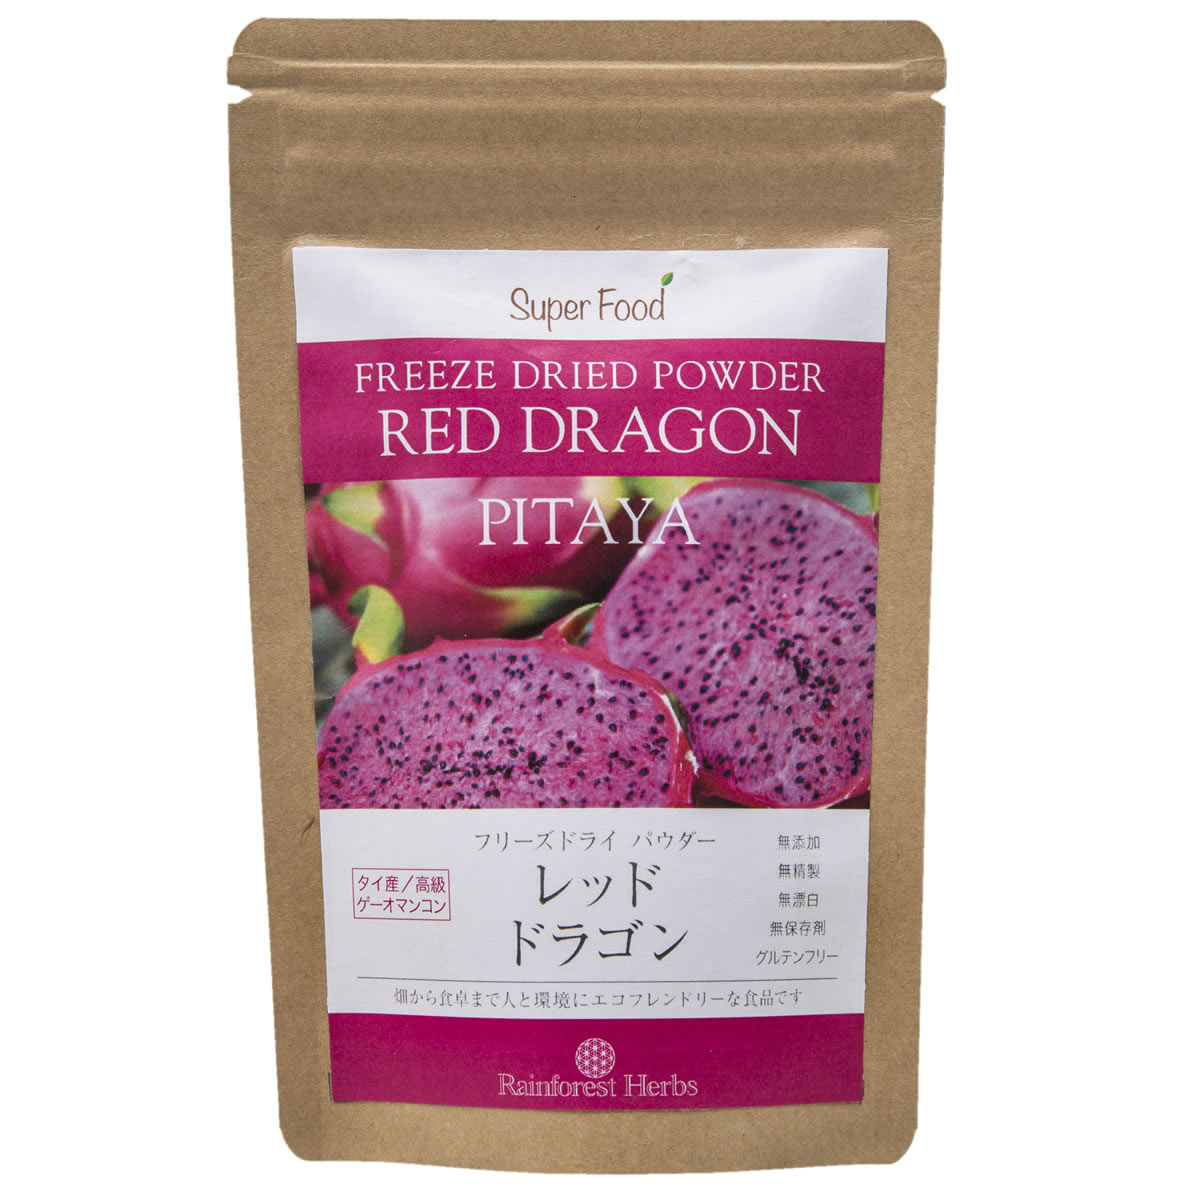 bhhSt[c s^pE_[ 60g 1 t[YhC ^CY Red Dragon Fruit Freeze Dried Powder PITAYA